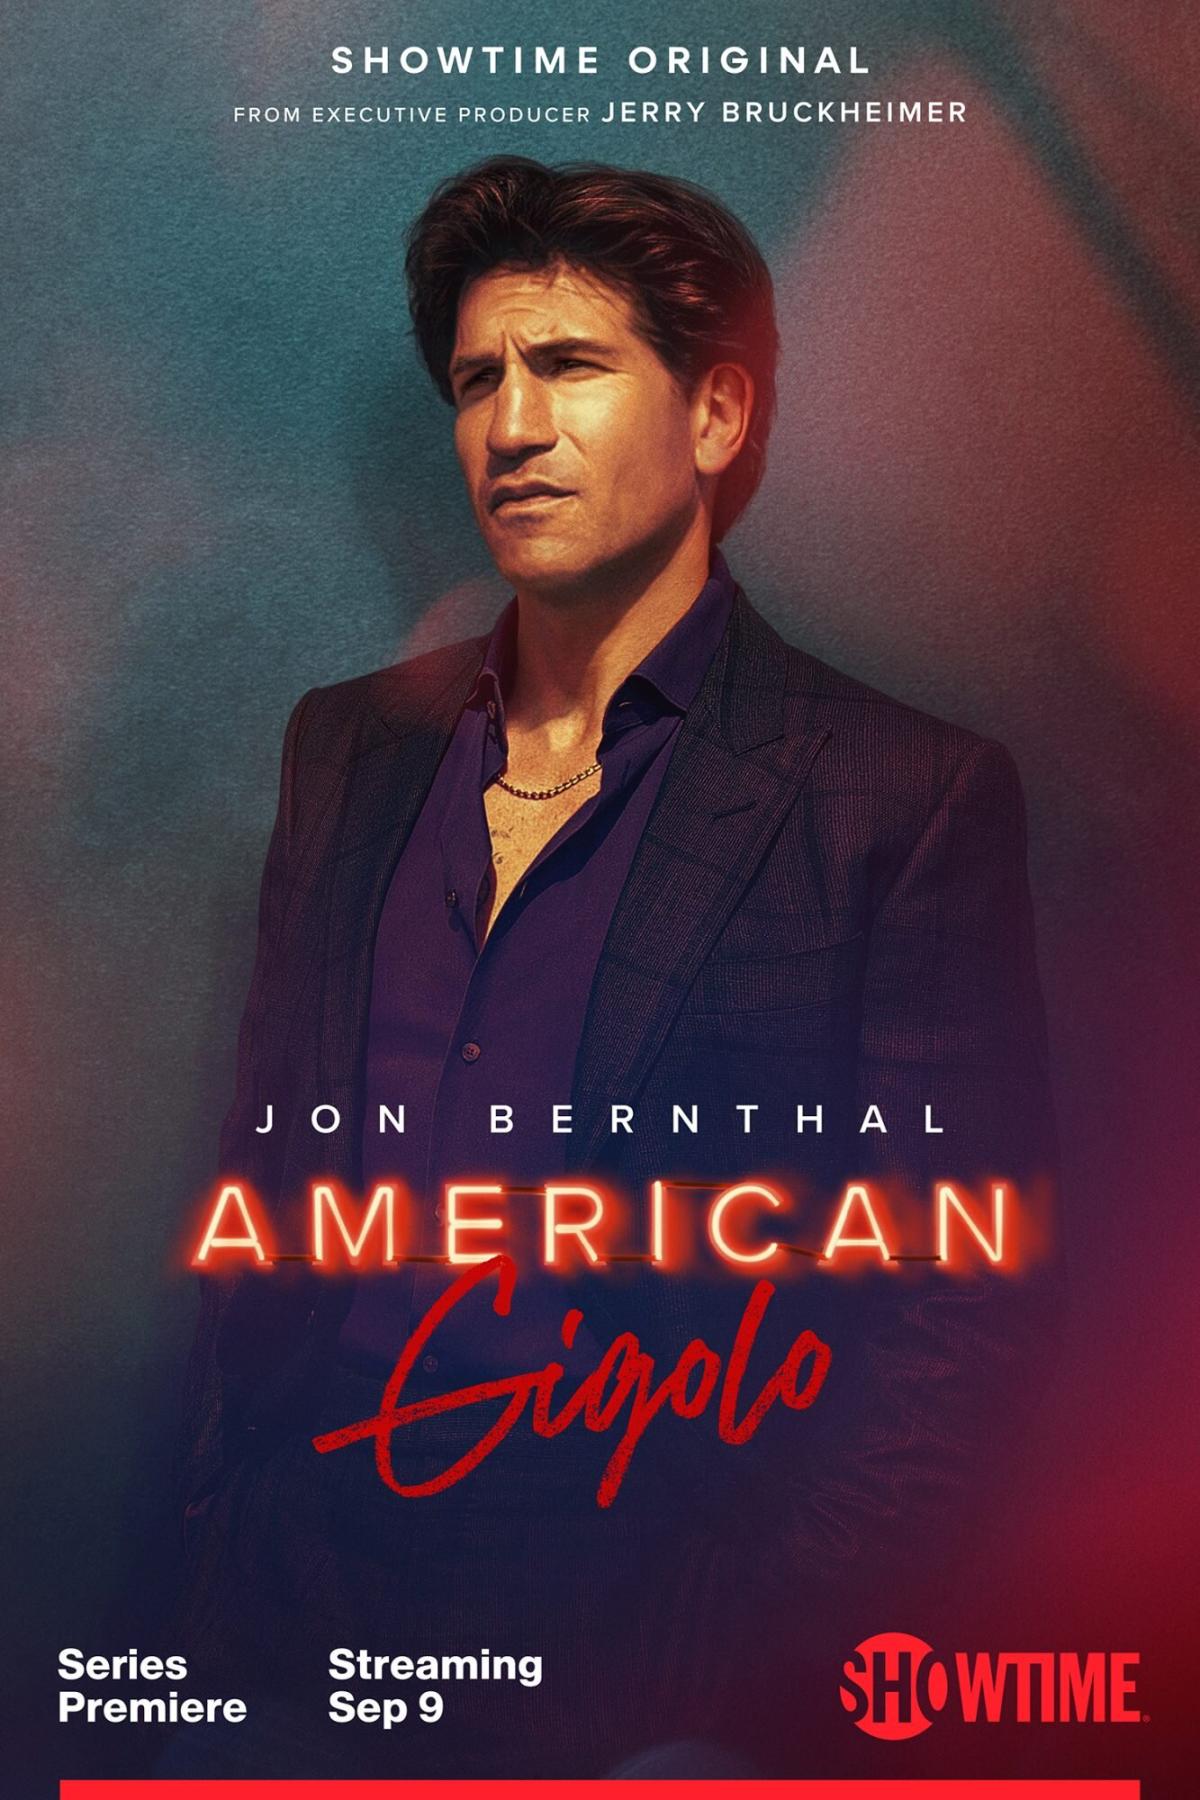 New American Gigolo Remake Trailer Sees Jon Bernthal as Former Male Escort Julian Kaye picture pic